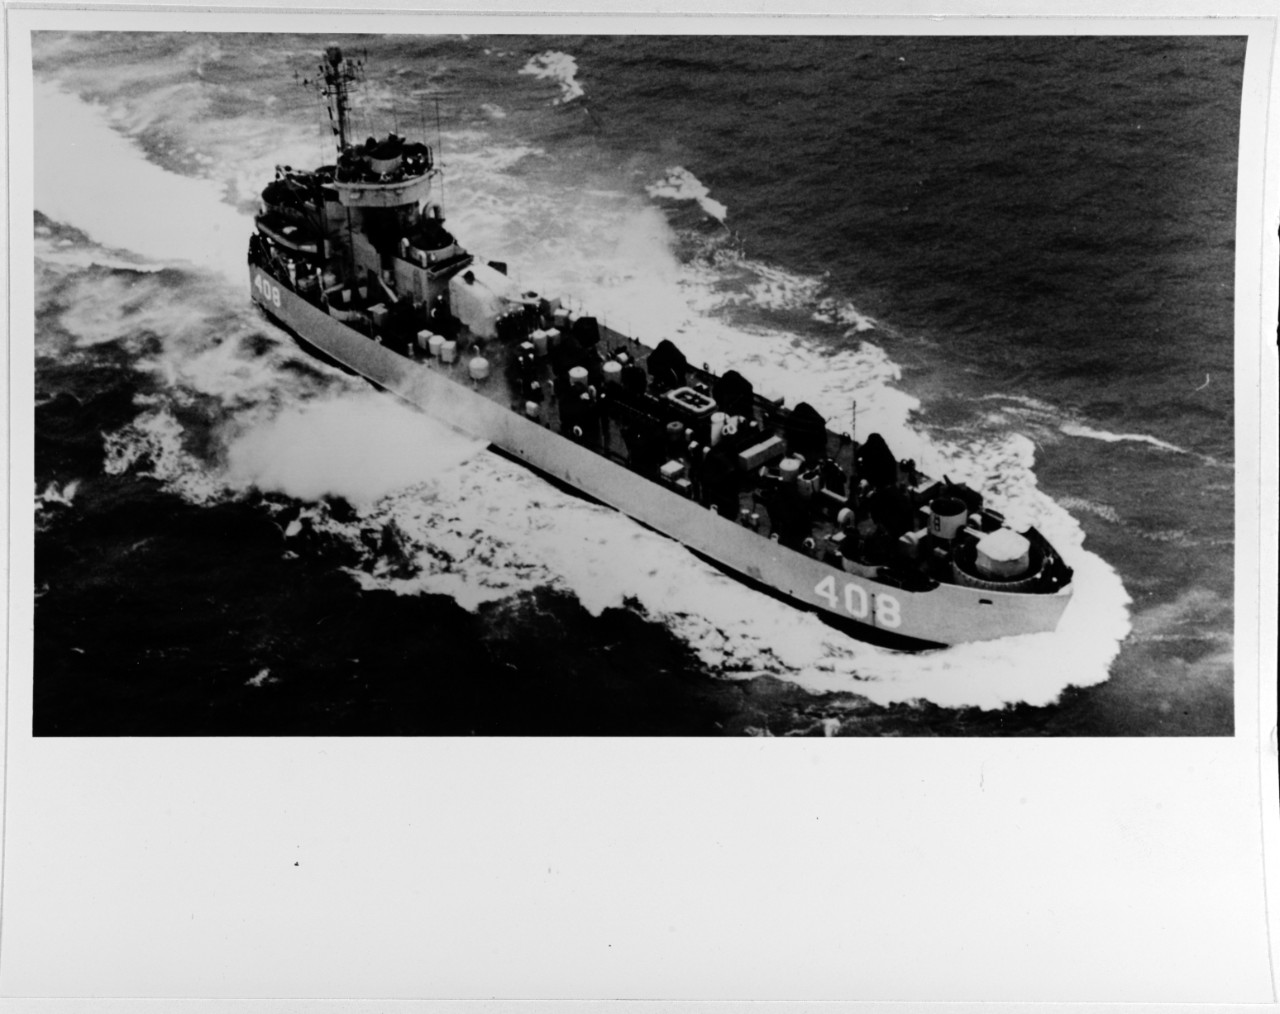 USS CHARLES RIVER (LSMR-408)